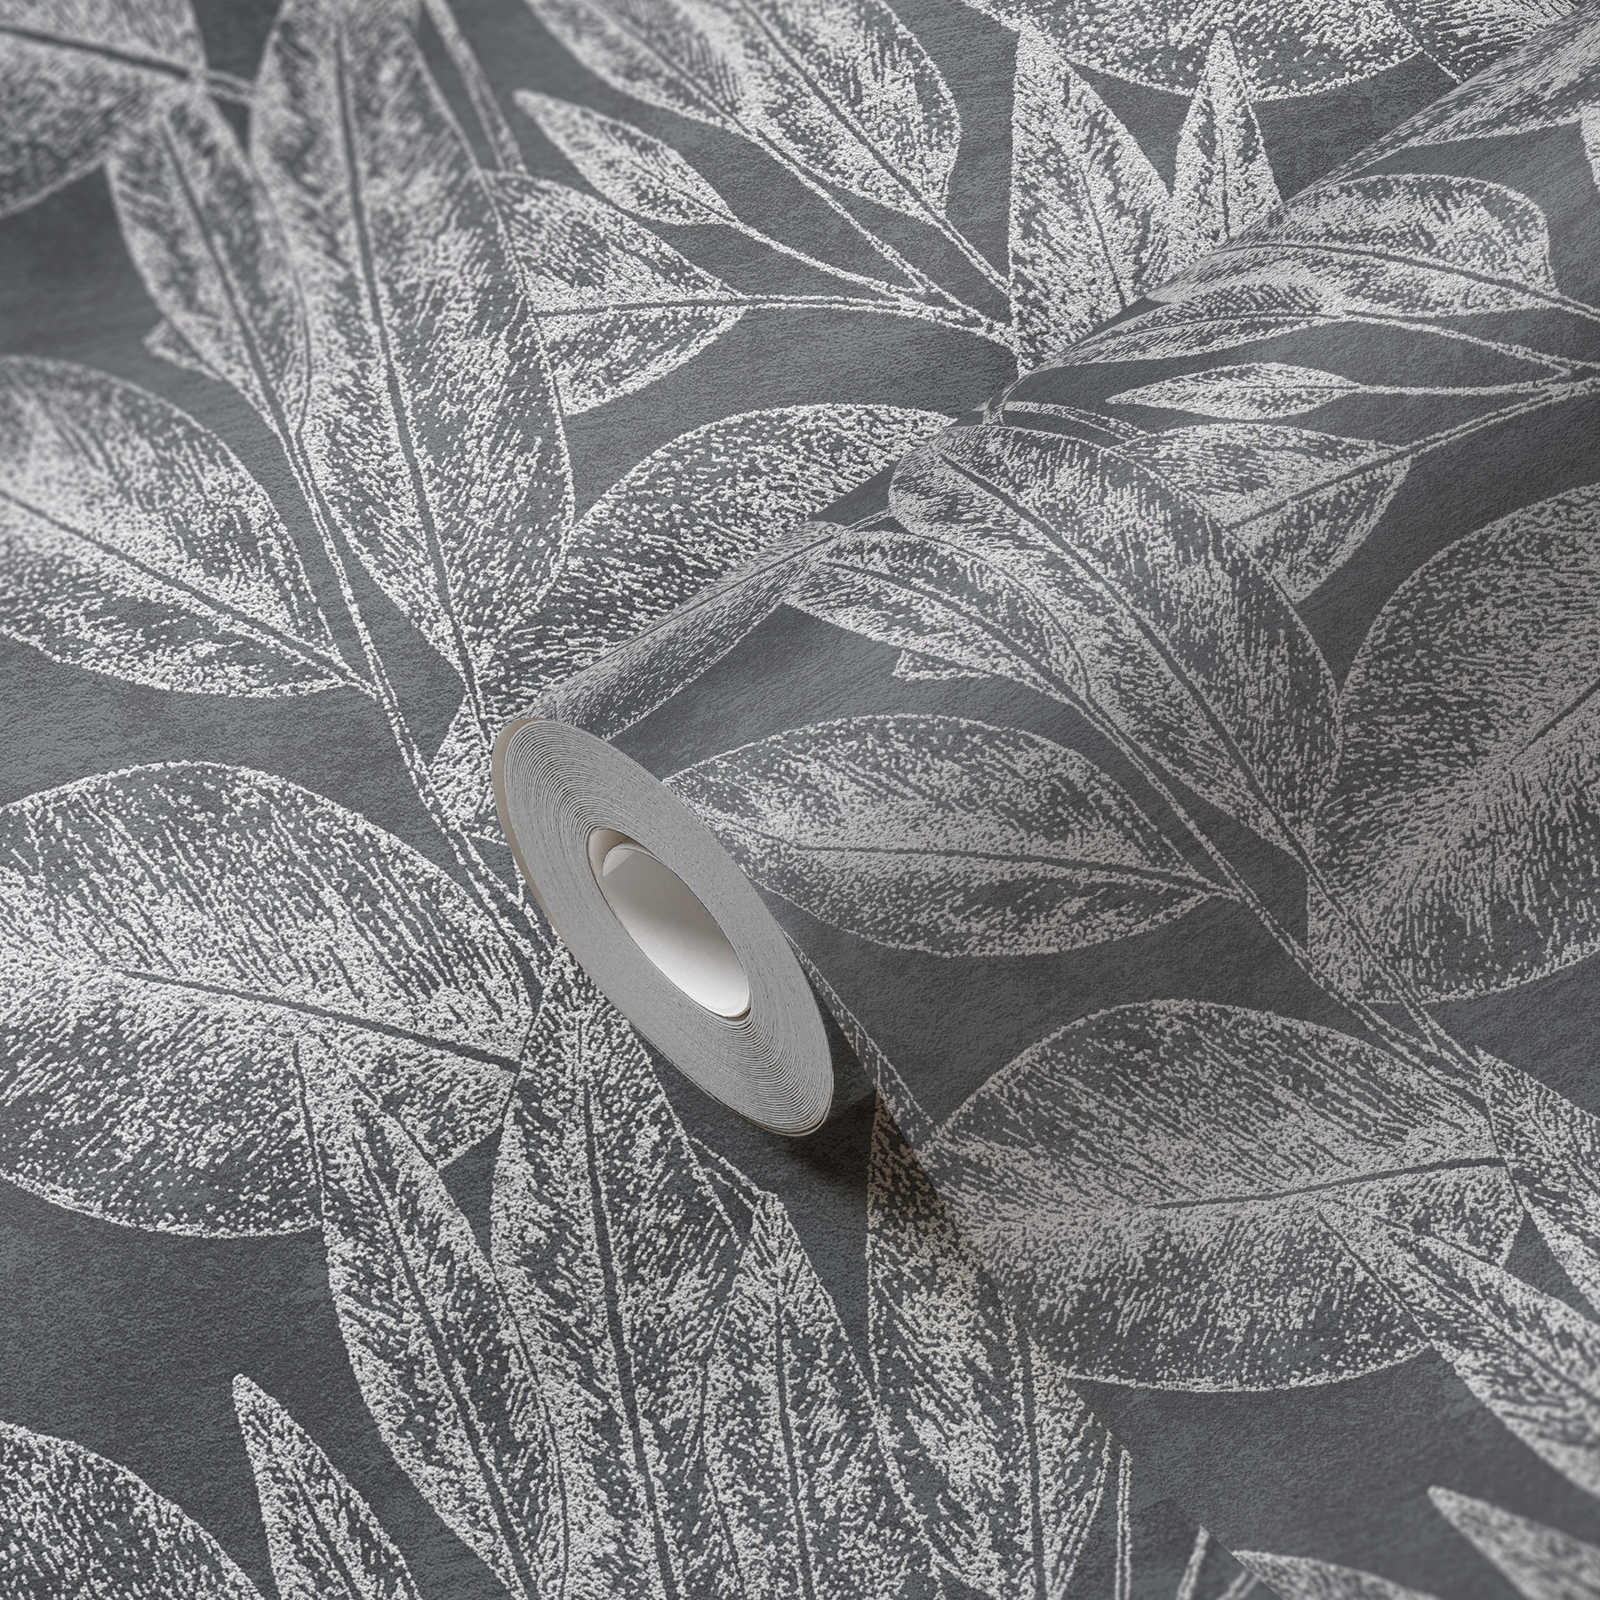             Papel pintado Leaves lines art - negro, metálico
        